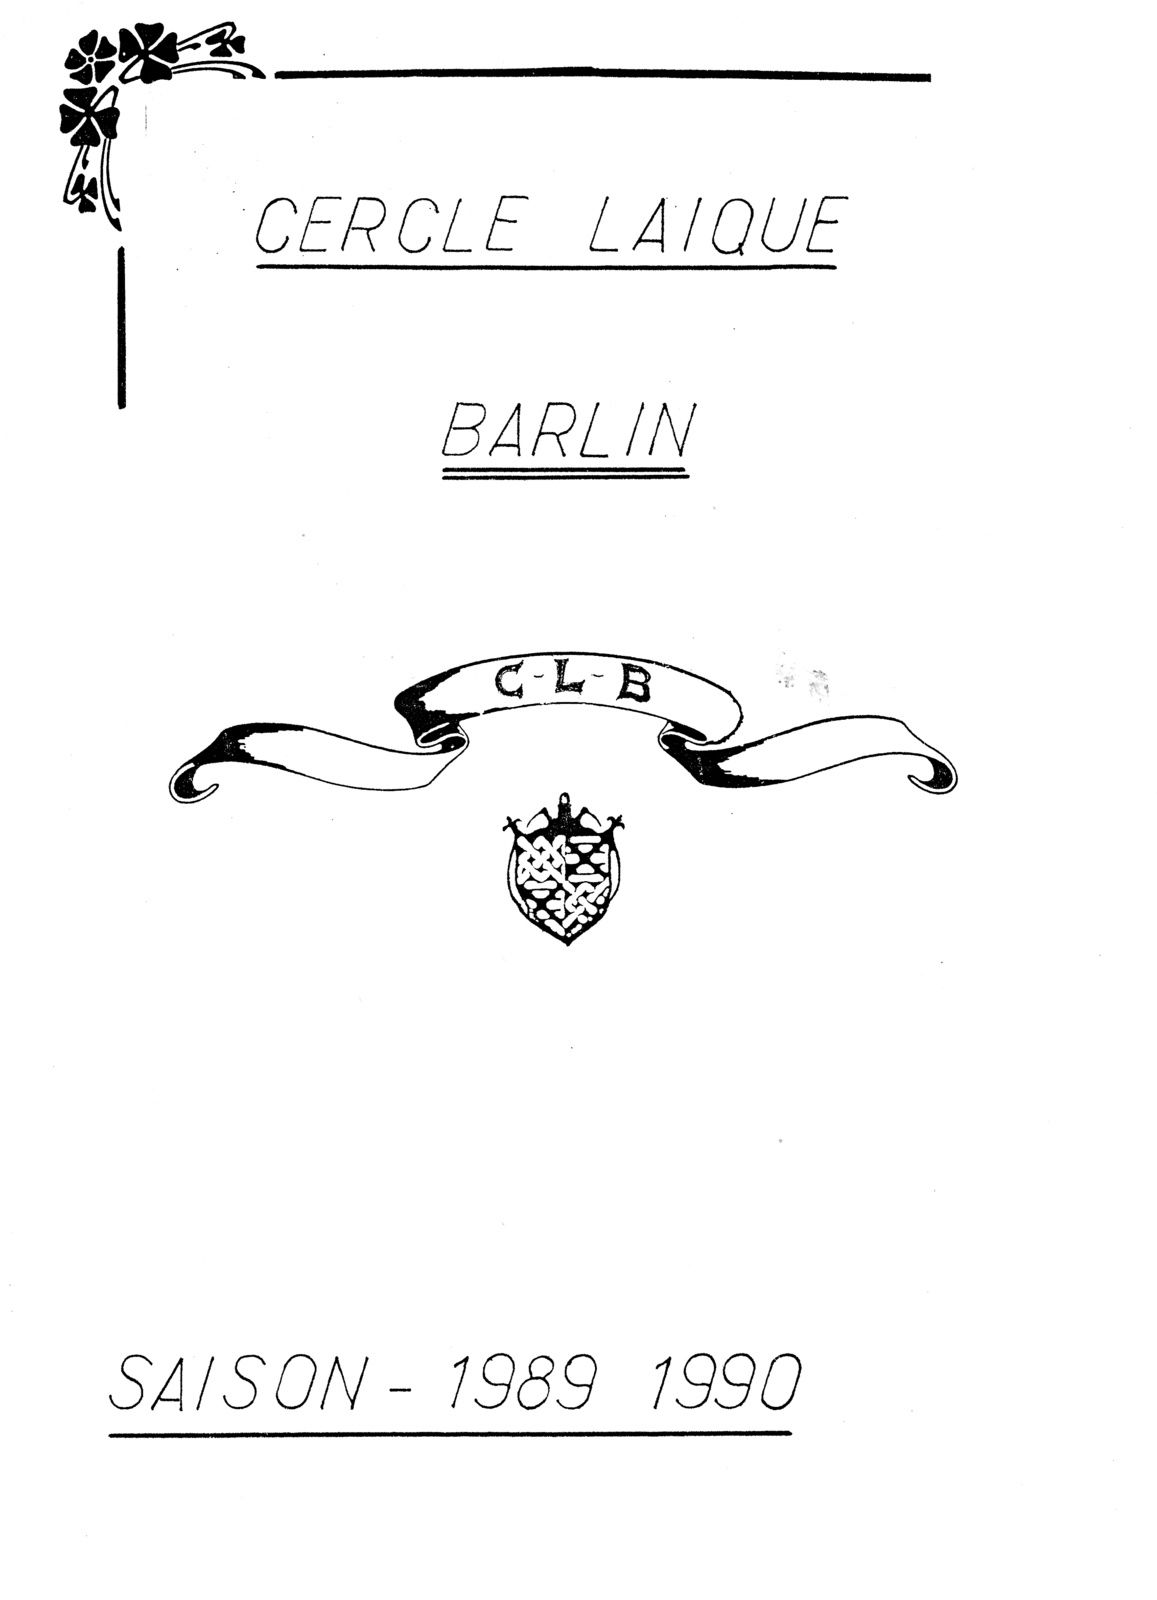 cercle laique de barlin - Barlin souvenirs